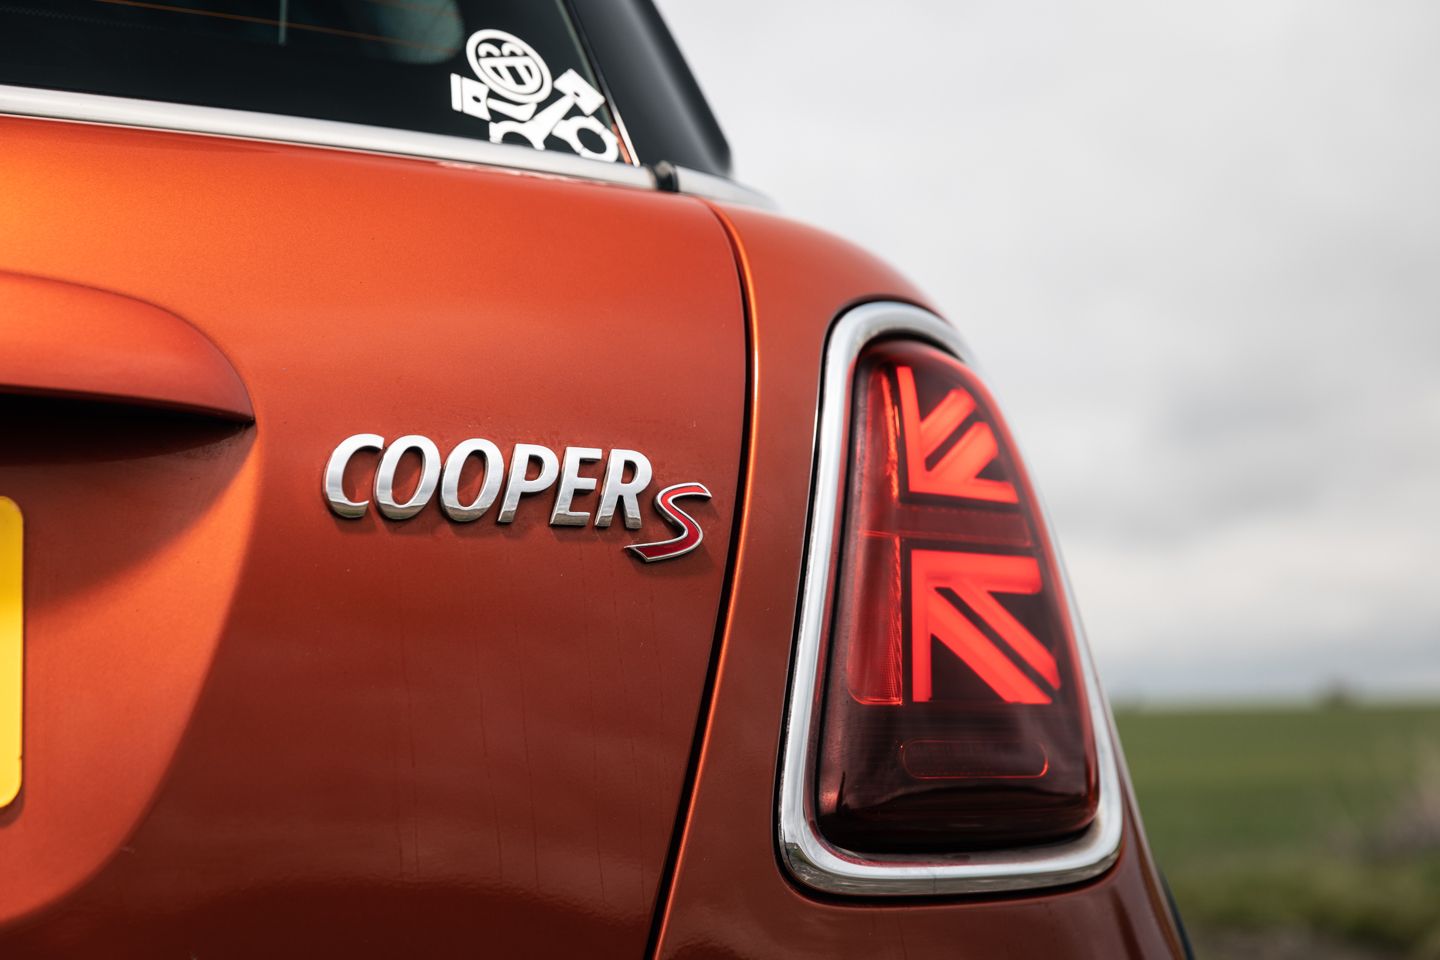 Mini Cooper S (R56)  PH Used Review - PistonHeads UK